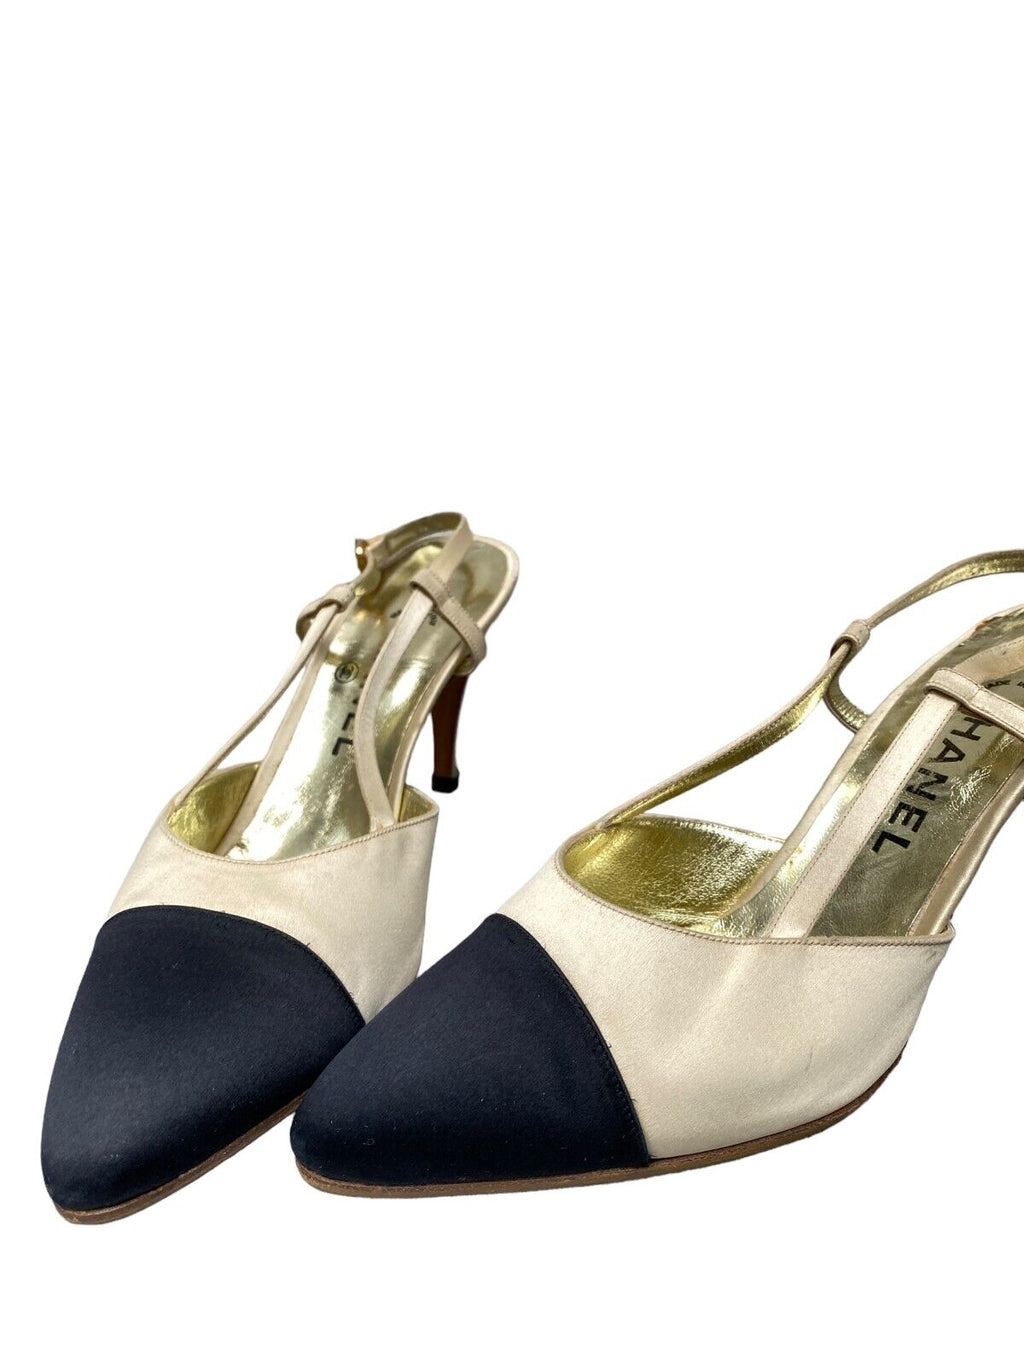 Ivory Black Slingback Pumps Heels Shoes  Size 39 1/2 US 9,5